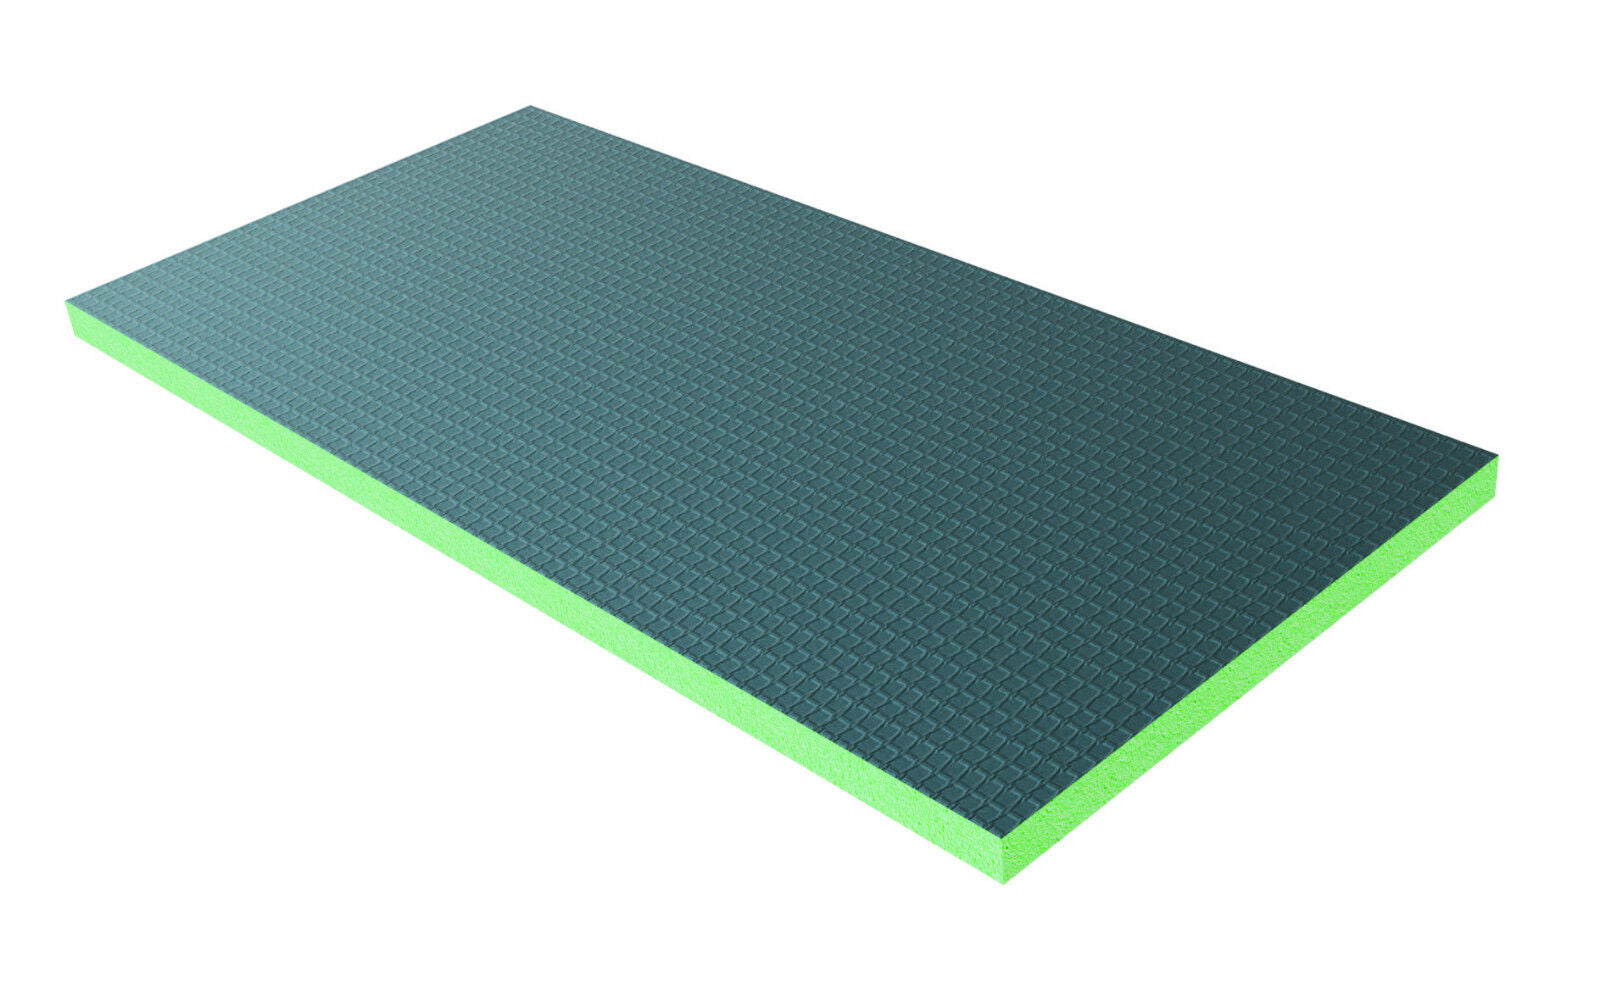 Cement Tile Backer Boards, Coated Insulation, Underfloor Heating